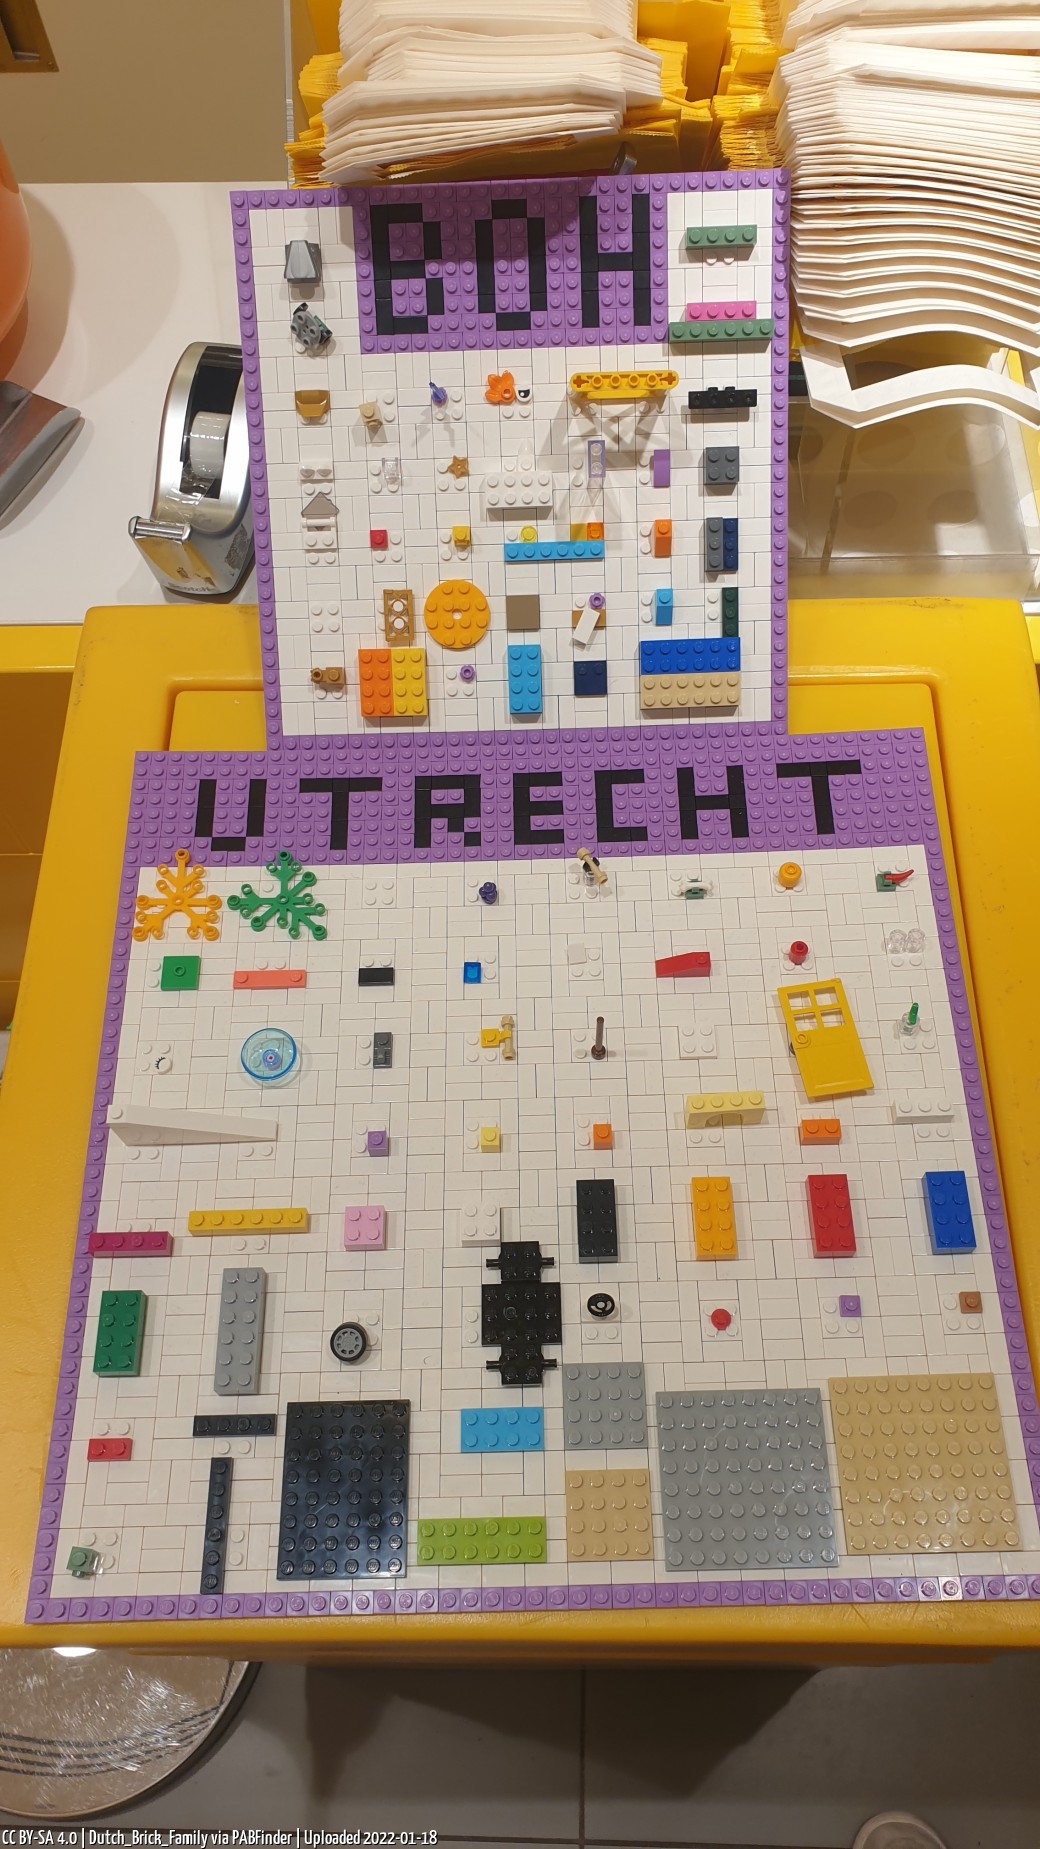 Pick a Brick Utrecht (Dutch_Brick_Family, 1/18/22, 10:34:53 PM)